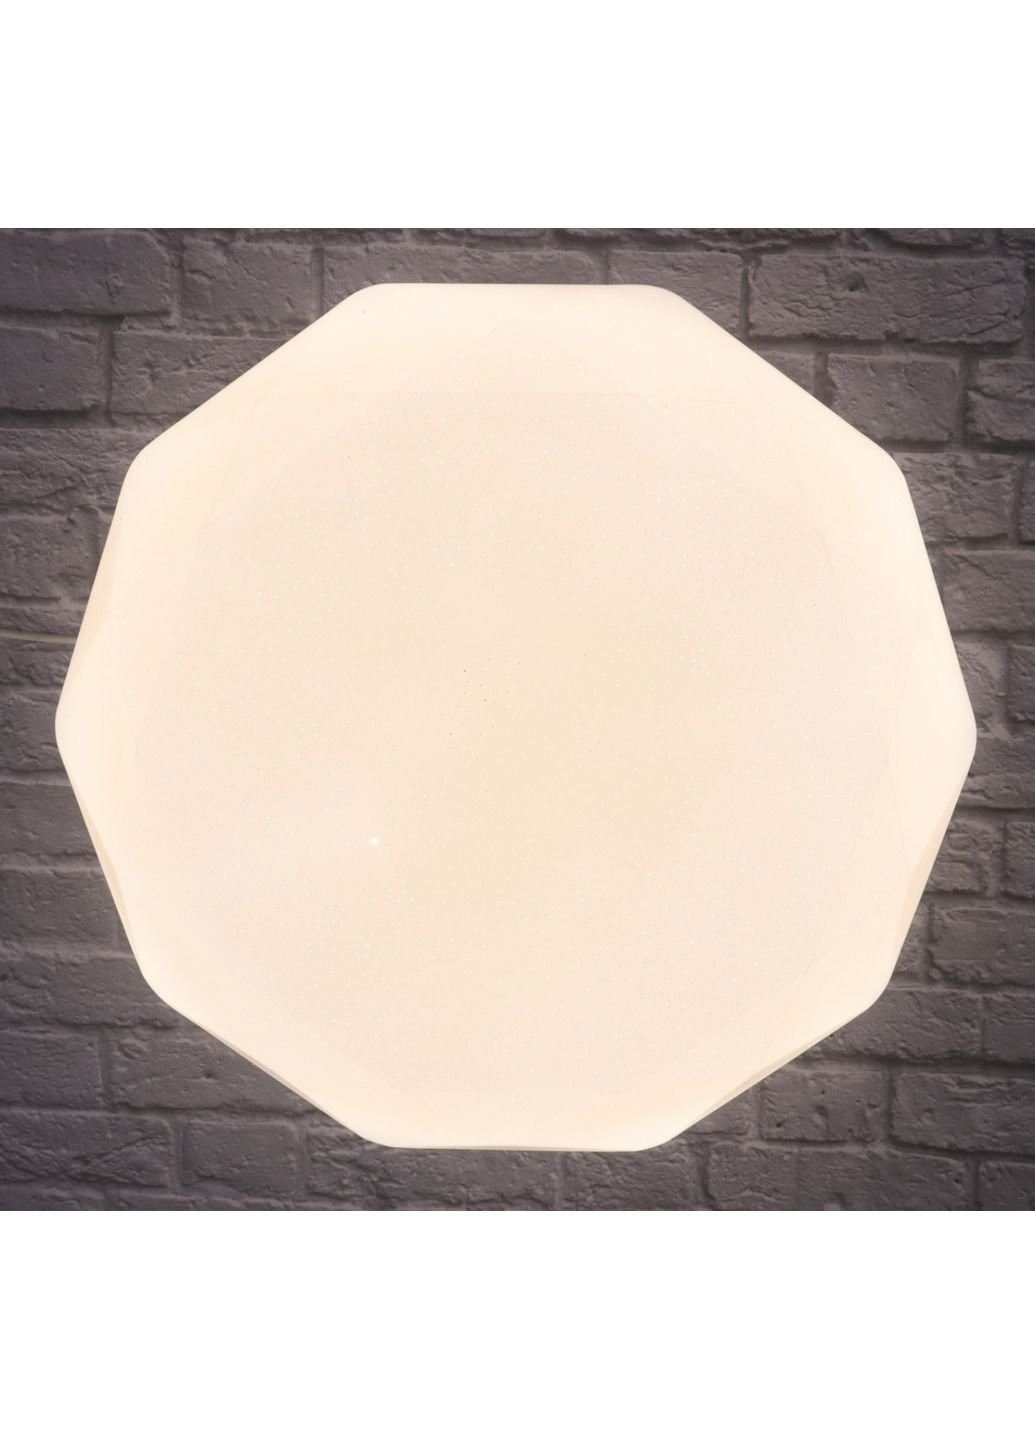 Светильник потолочный LED с пультом W71115/500 Белый 10х48х48 см. Sunnysky (253628056)